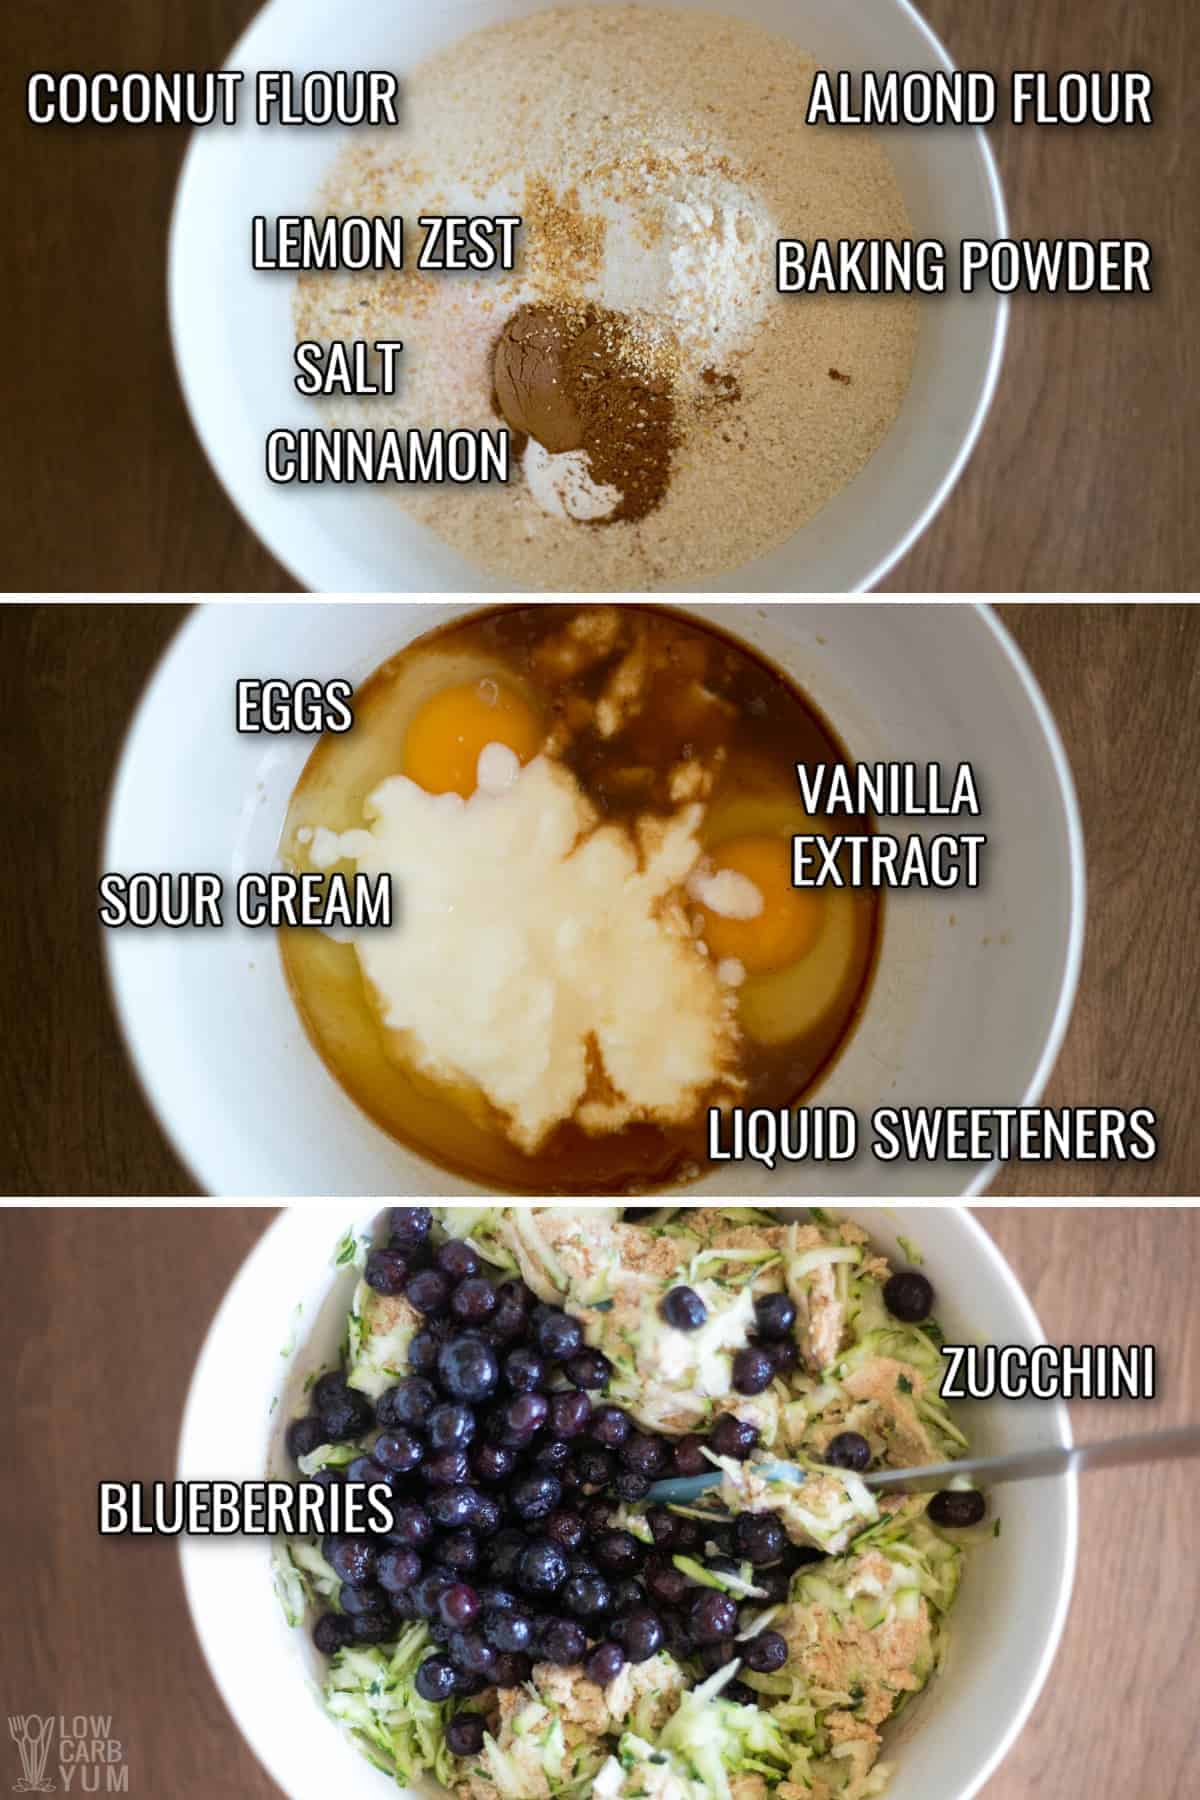 zucchini blueberry muffin recipe ingredients.